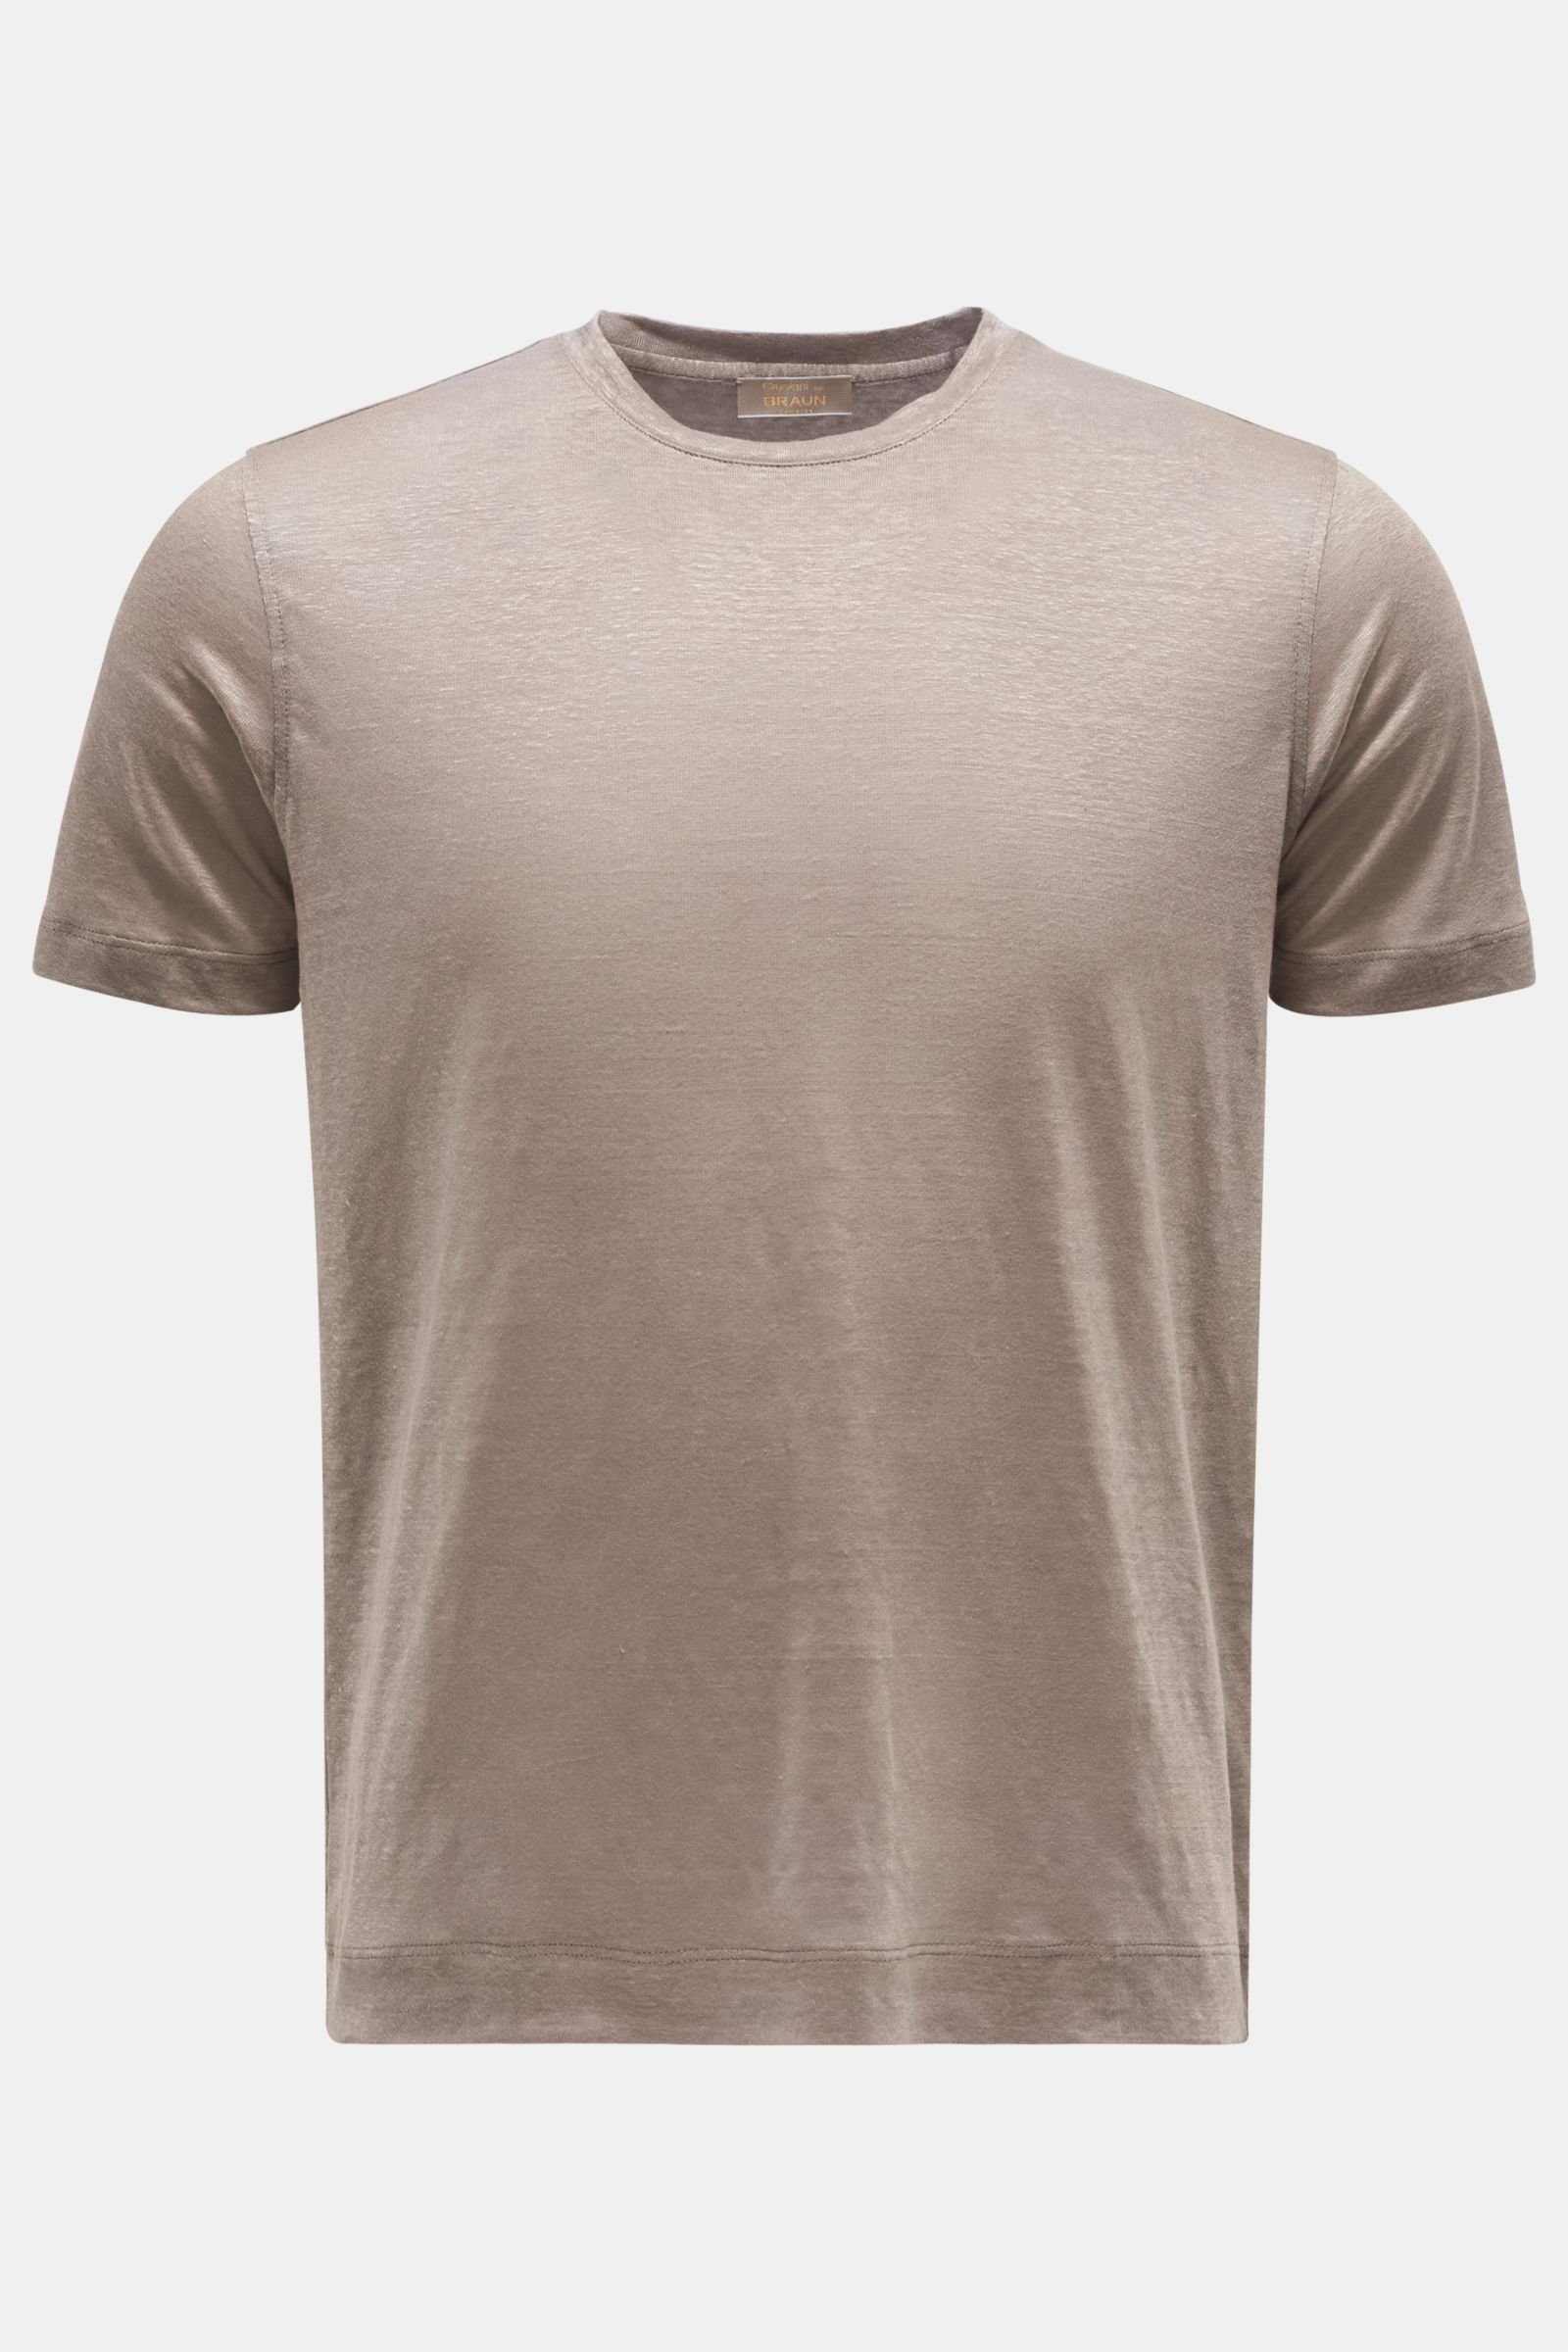 Linen crew neck T-shirt grey-brown